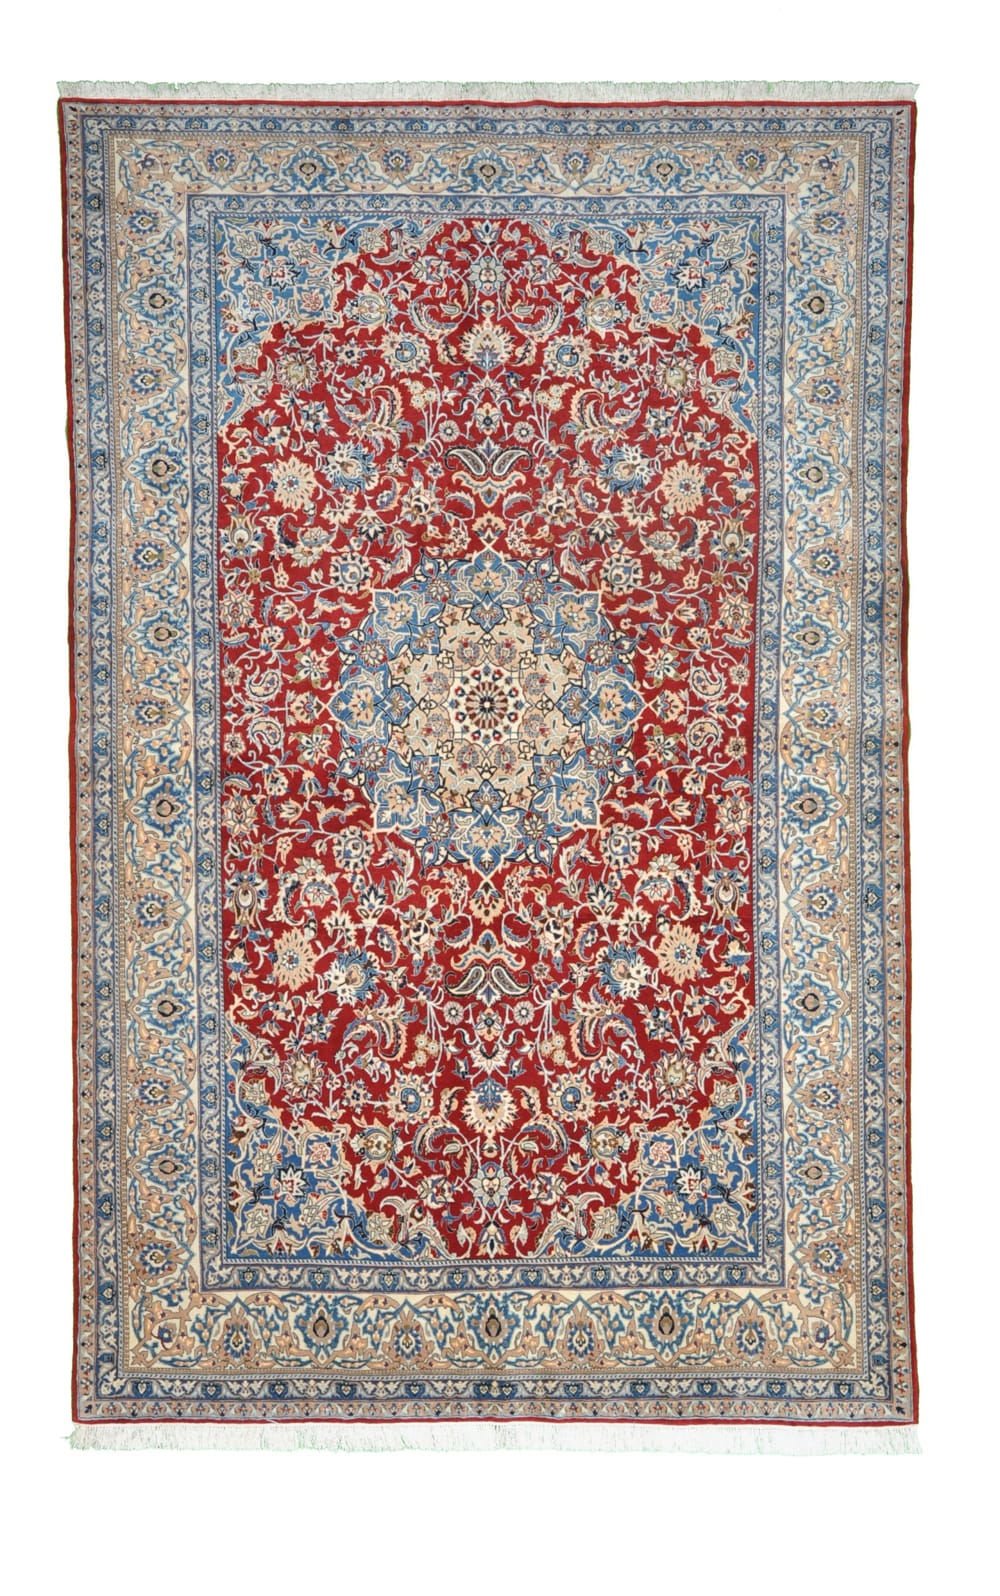 Rug# 41717, Superfine vintage Toudeshk-Nain,, fine wool pile, Medallion safavid design, circa 1935, immaculate, Persia , size 250x154 cm